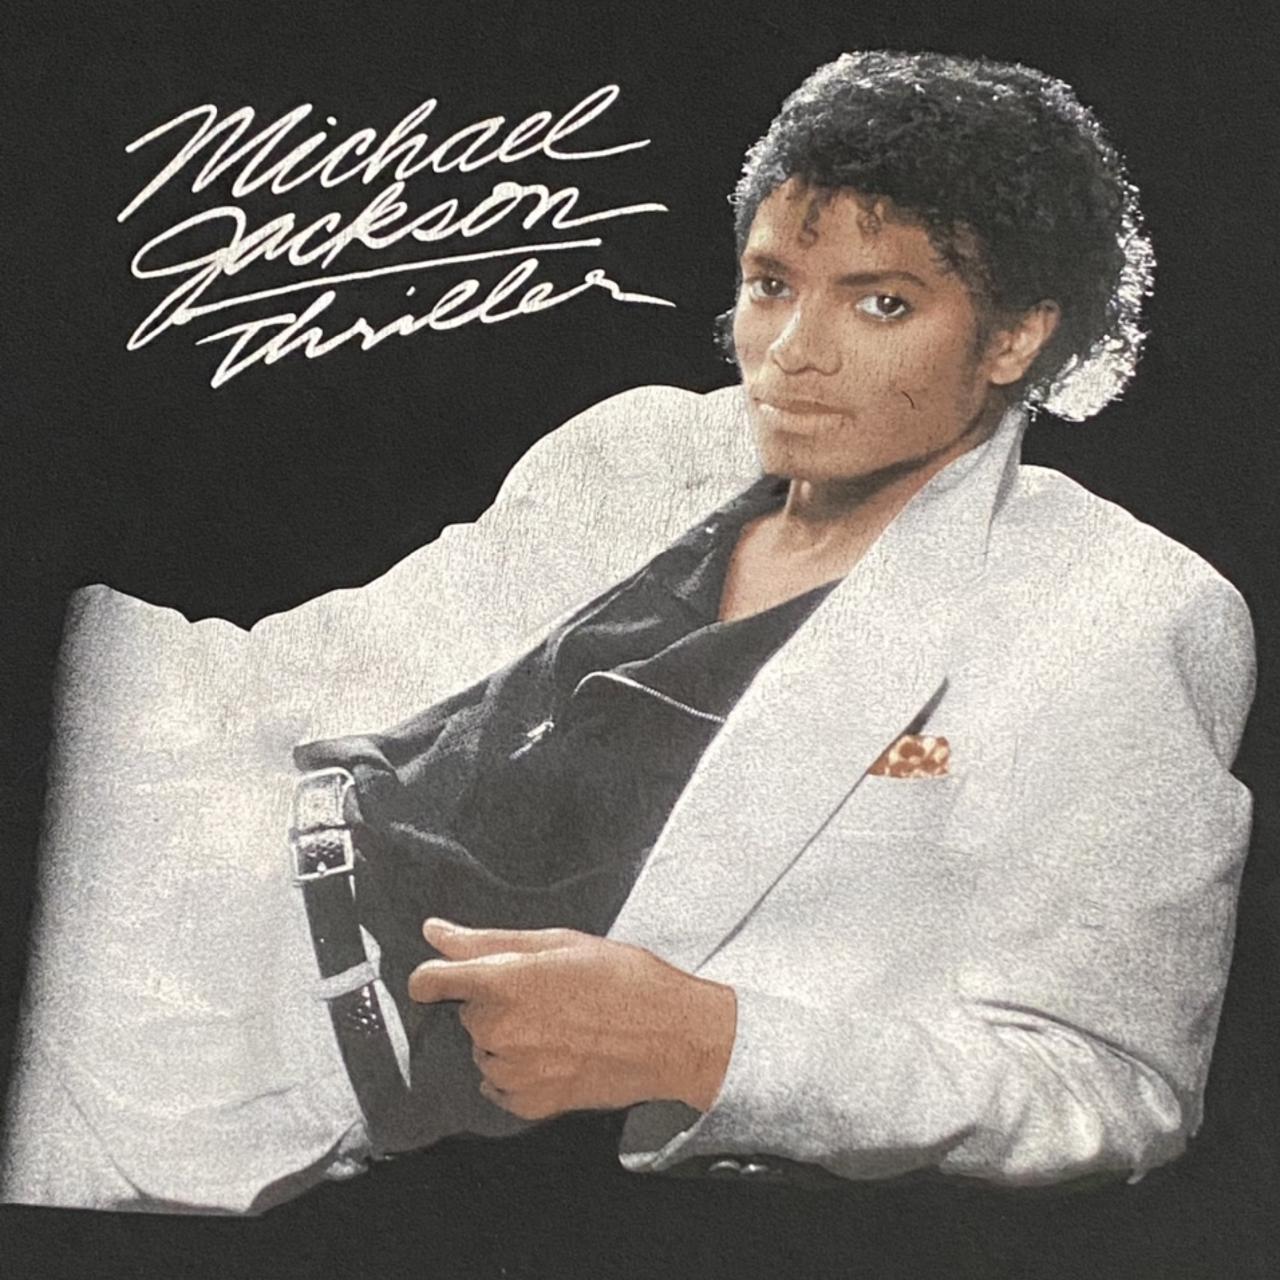 Michael Jackson Thriller album cover shirt, sweater, hoodie